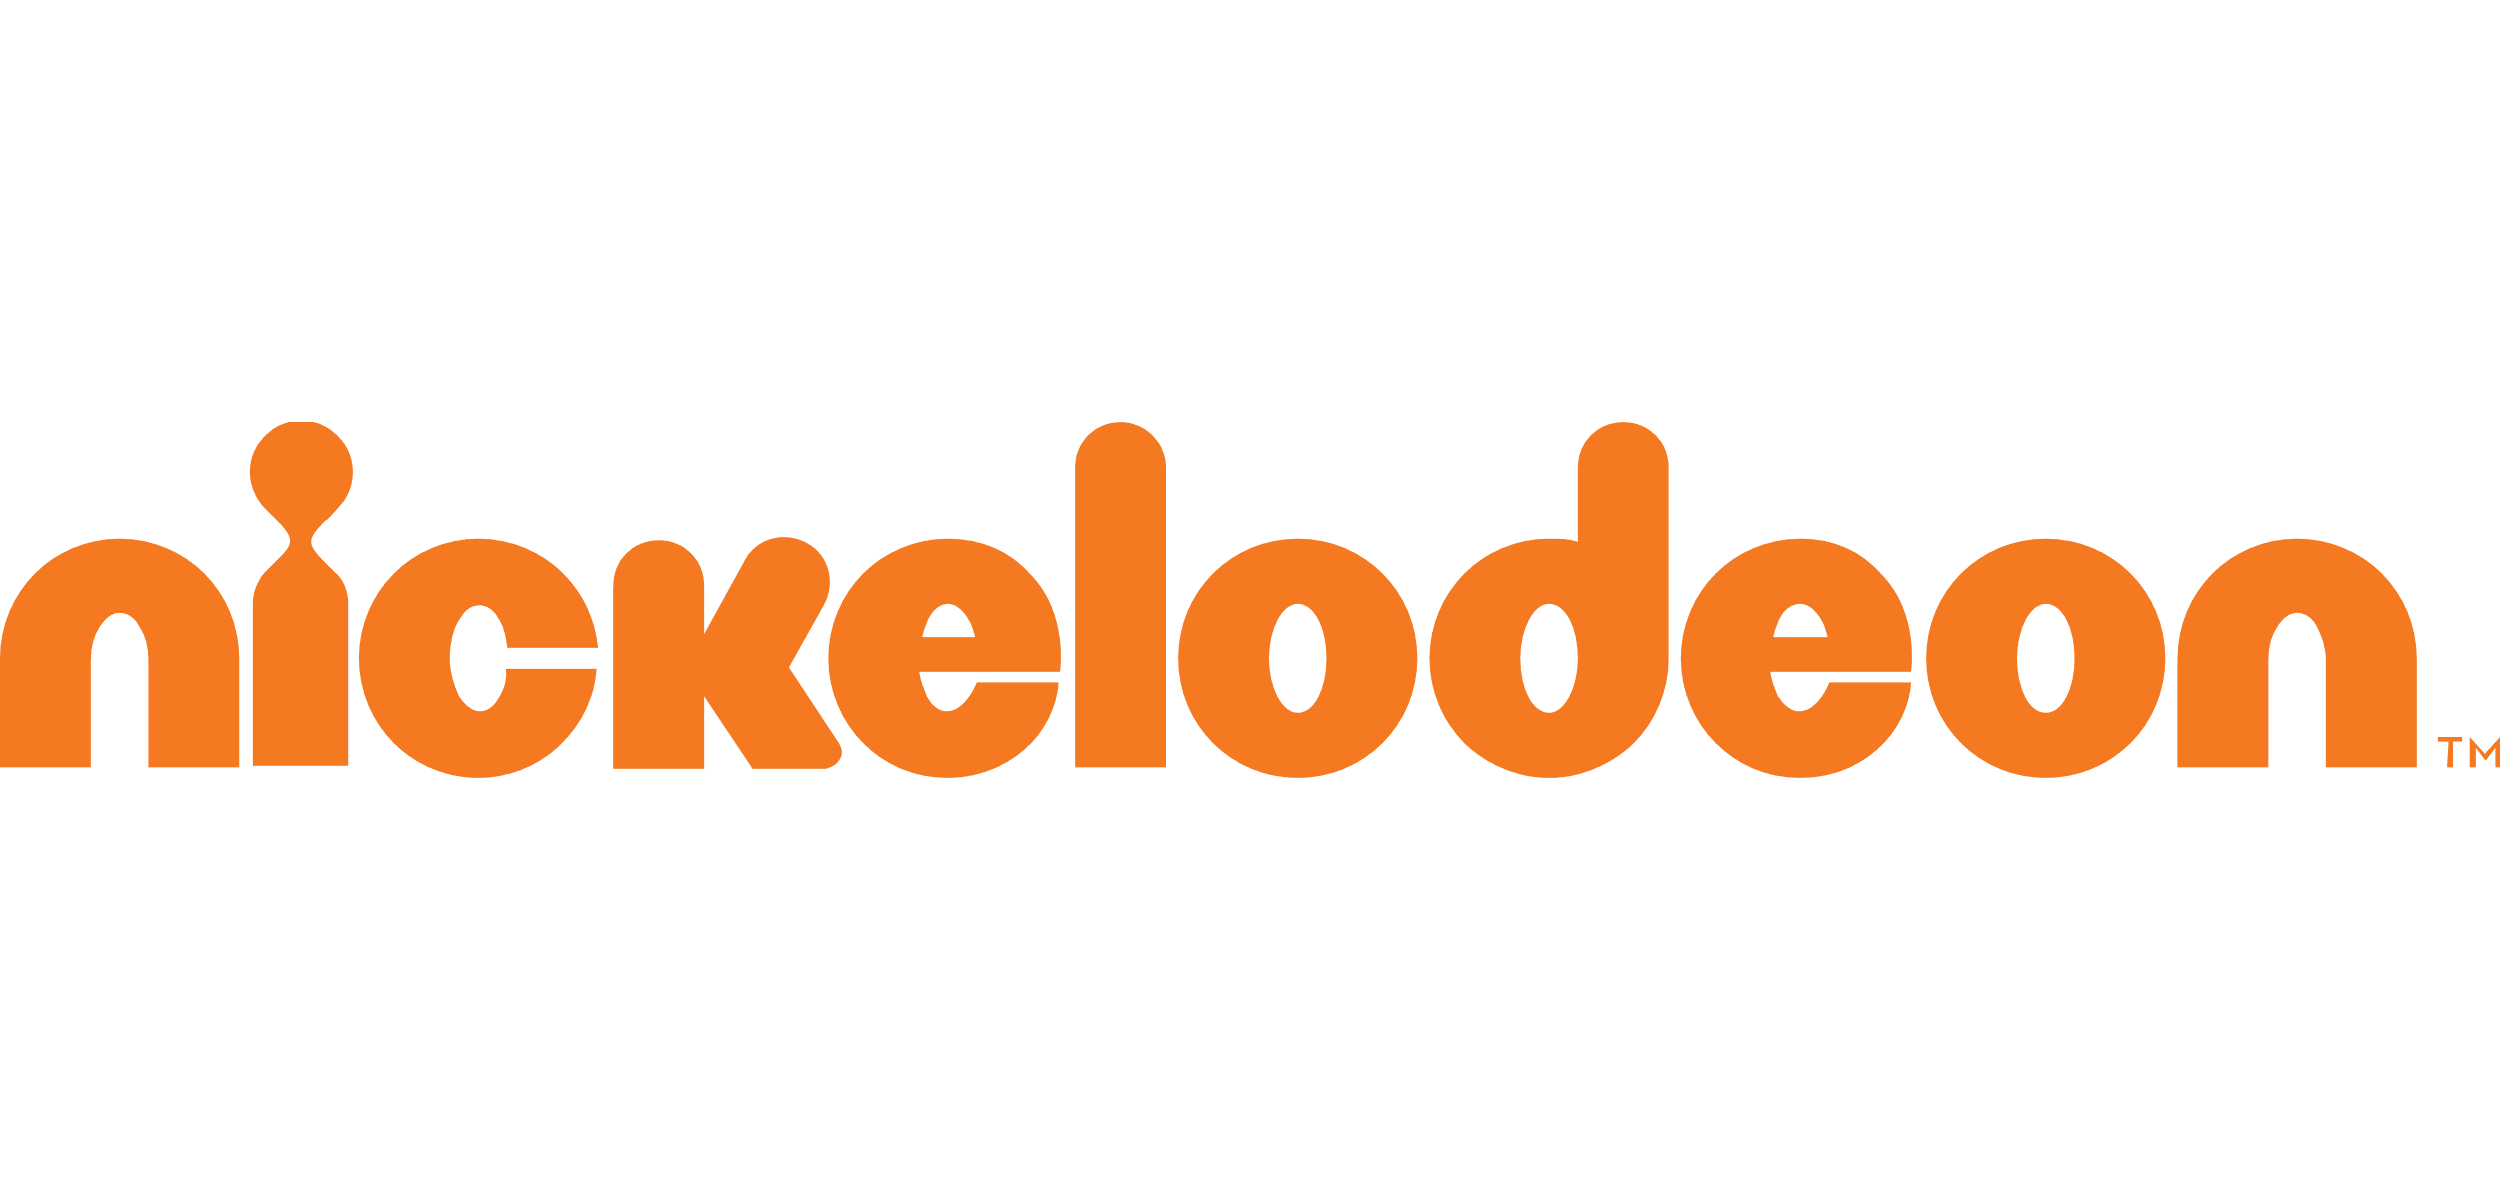 Nickelodeon Logo - símbolo, significado logotipo, historia, PNG